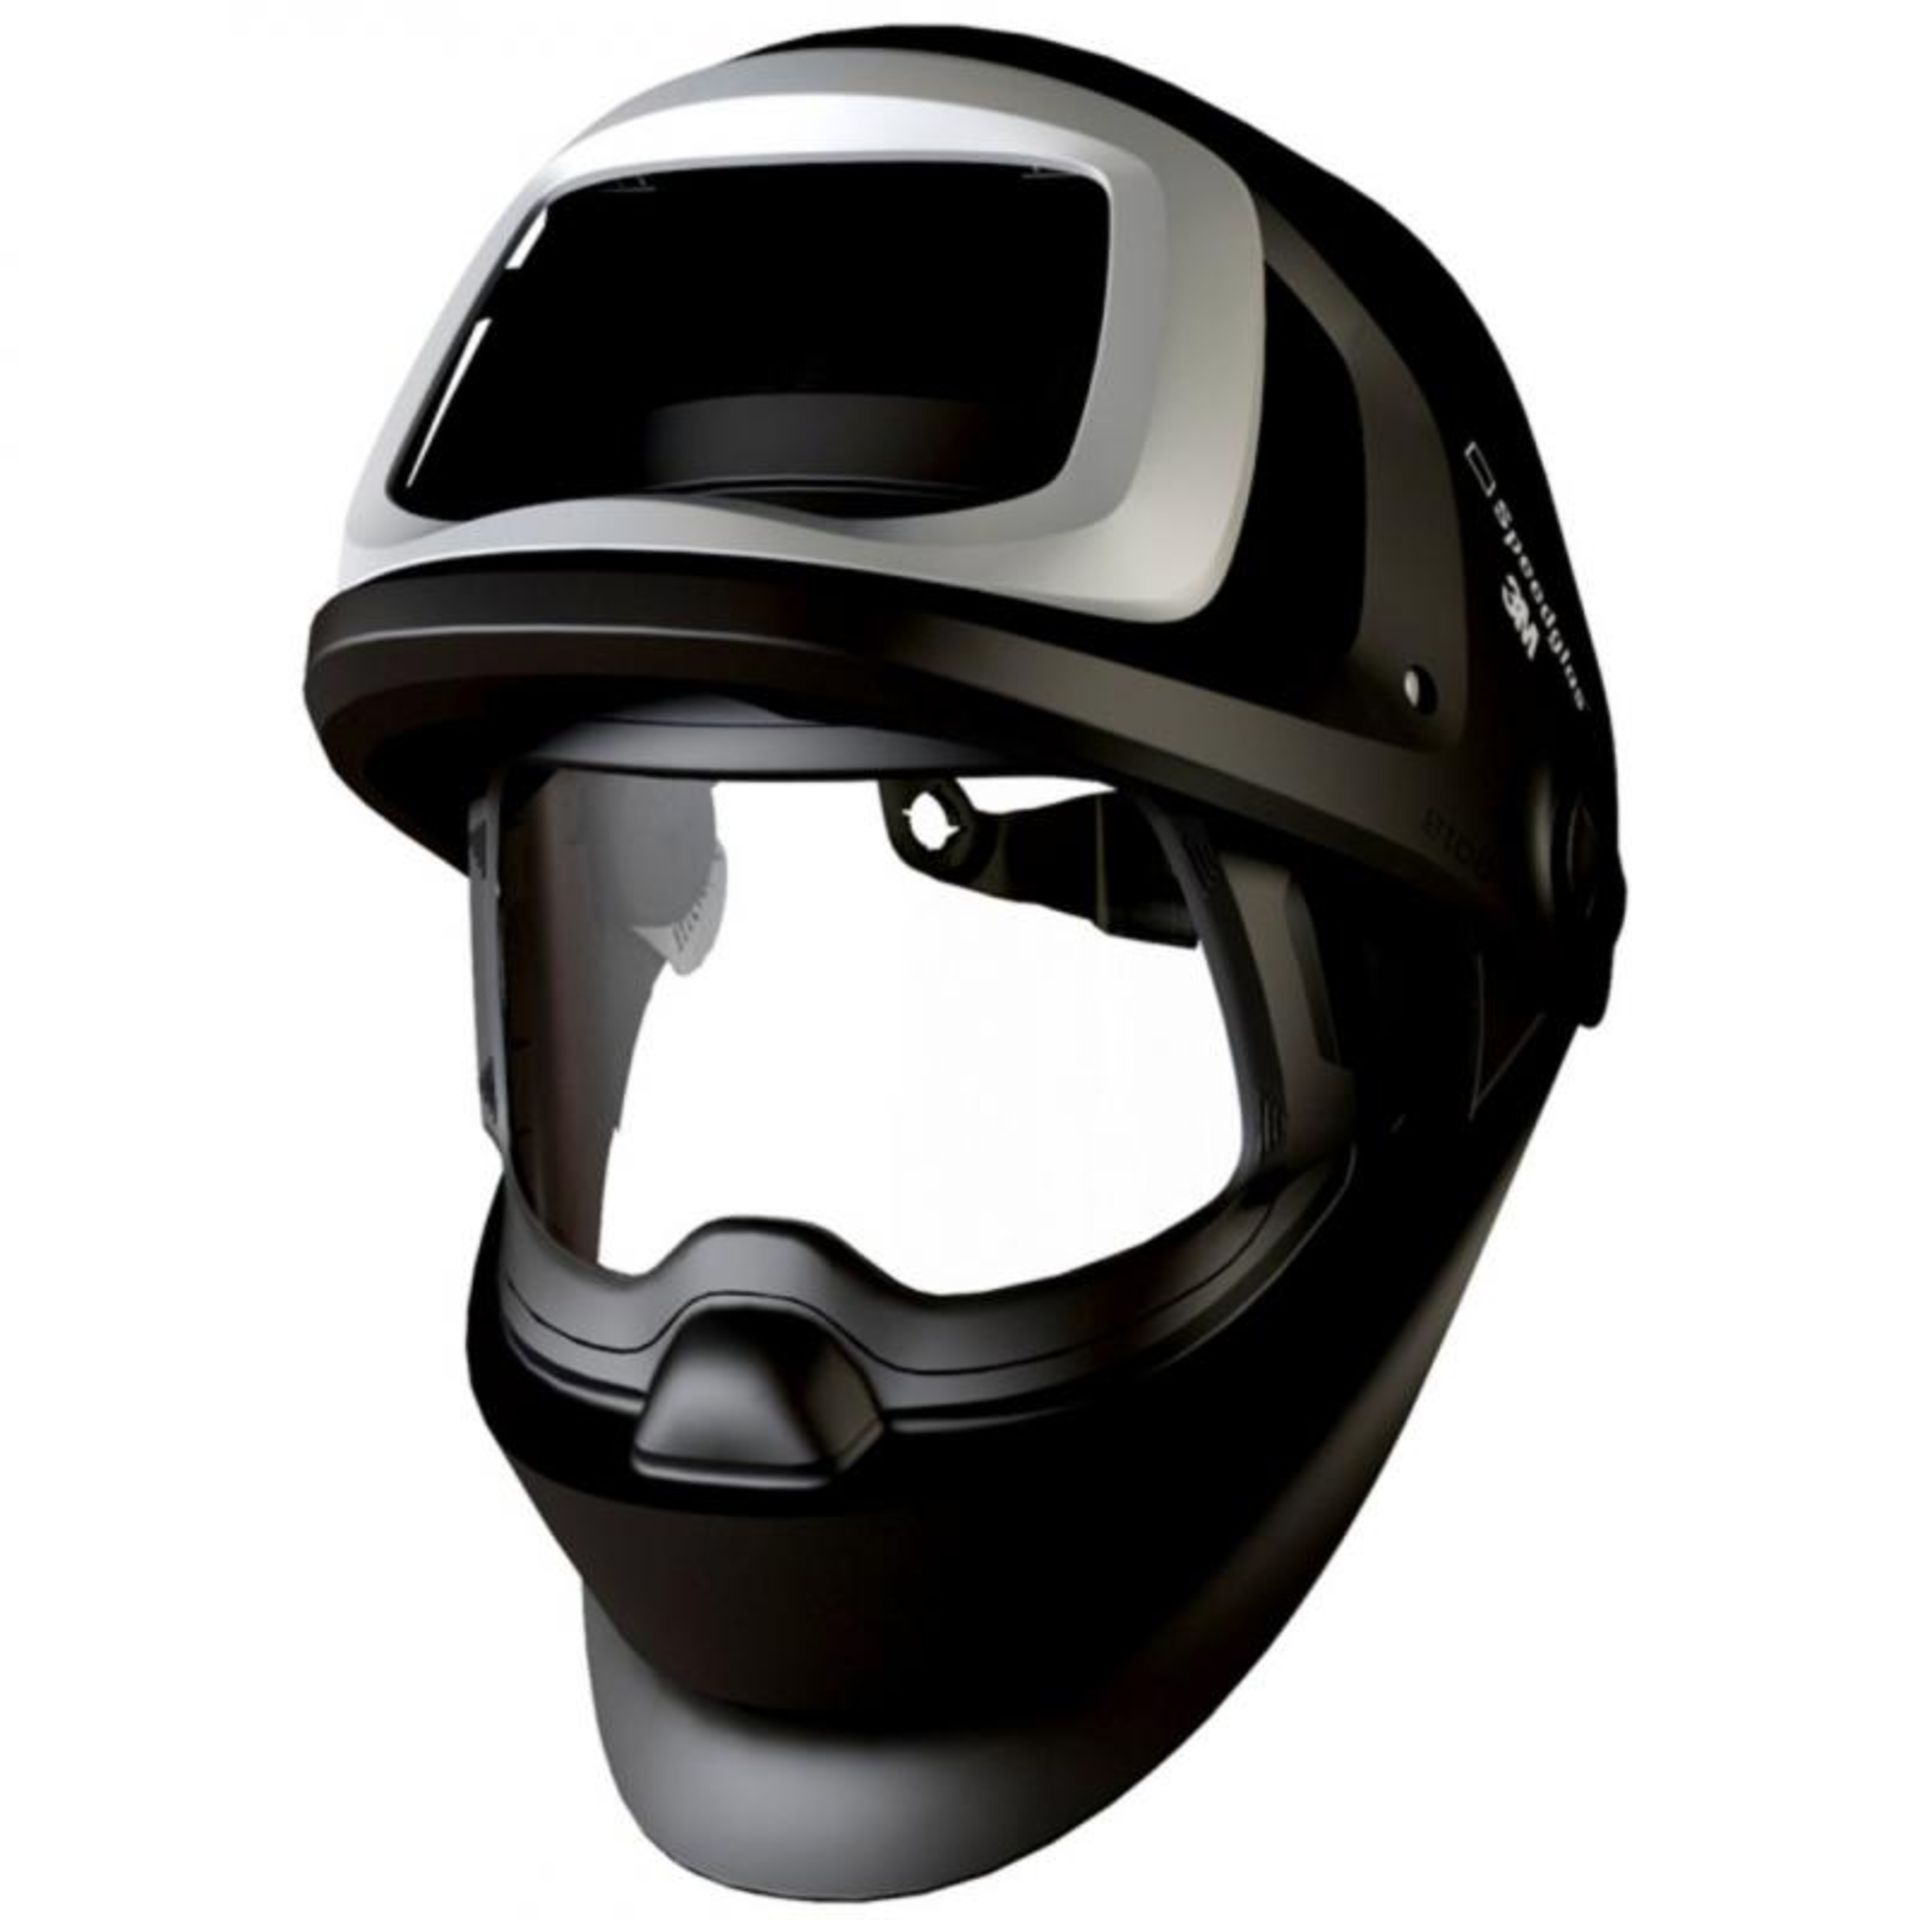 1 x Speedglas 9100FX Air Weld Helmet Without Adflo - CL185 - Ref: 59975/P30 - New Stock - Location: